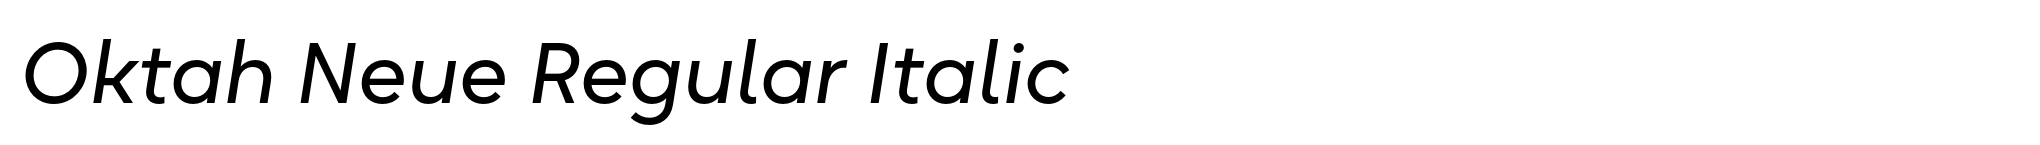 Oktah Neue Regular Italic image